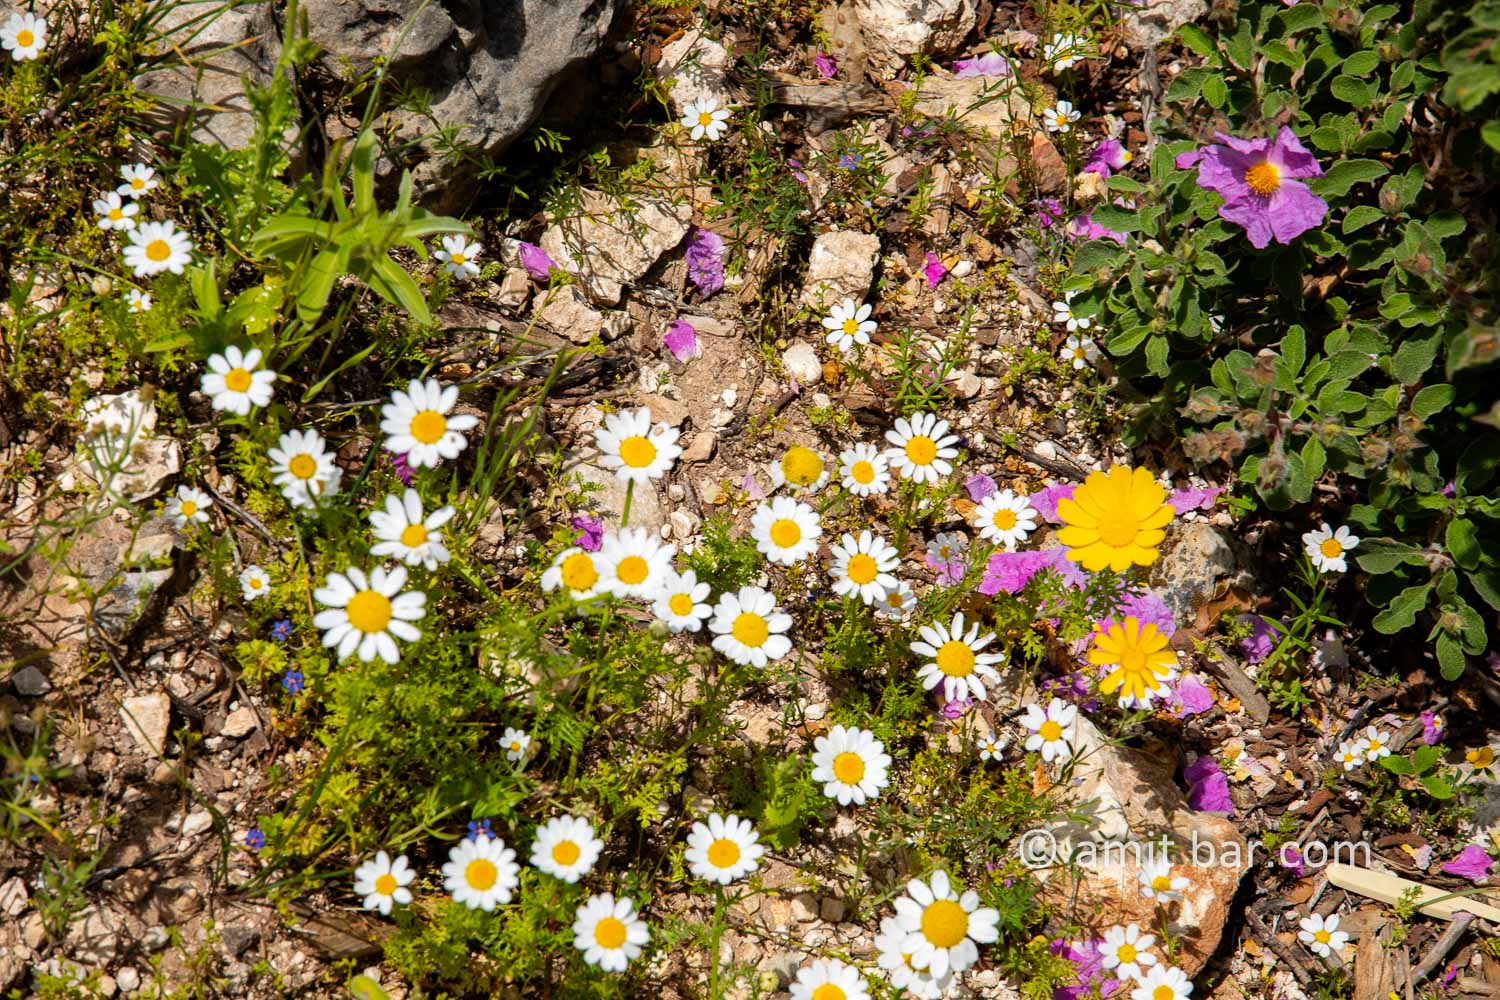 Carmel wild flowers VIII: wild flowers on mountain Carmel, Israel in the spring time